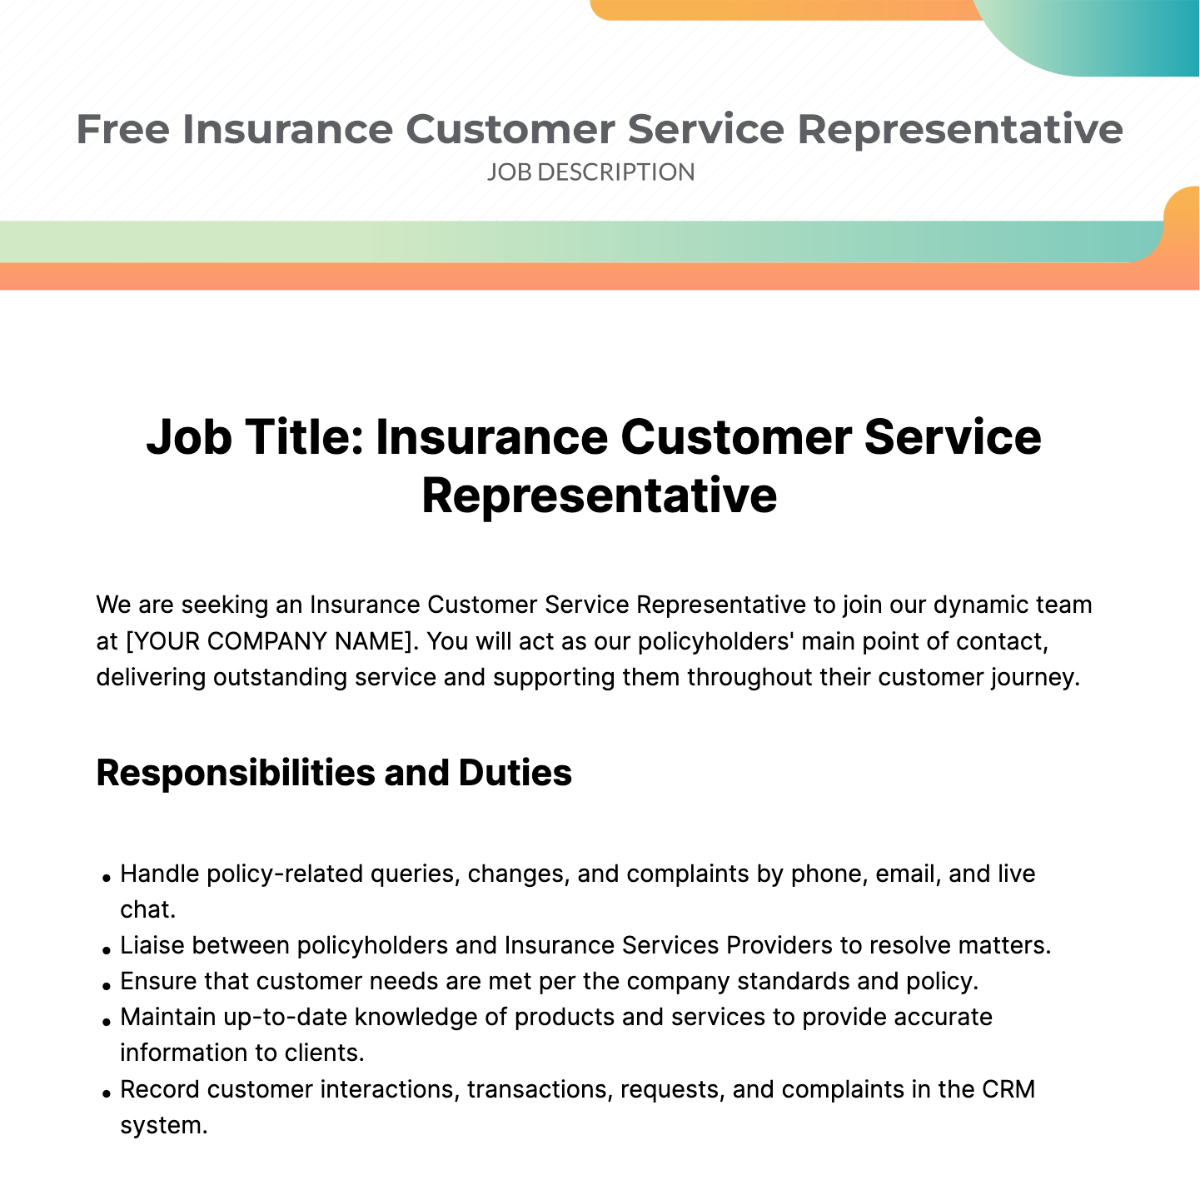 Free Insurance Customer Service Representative Job Description Template